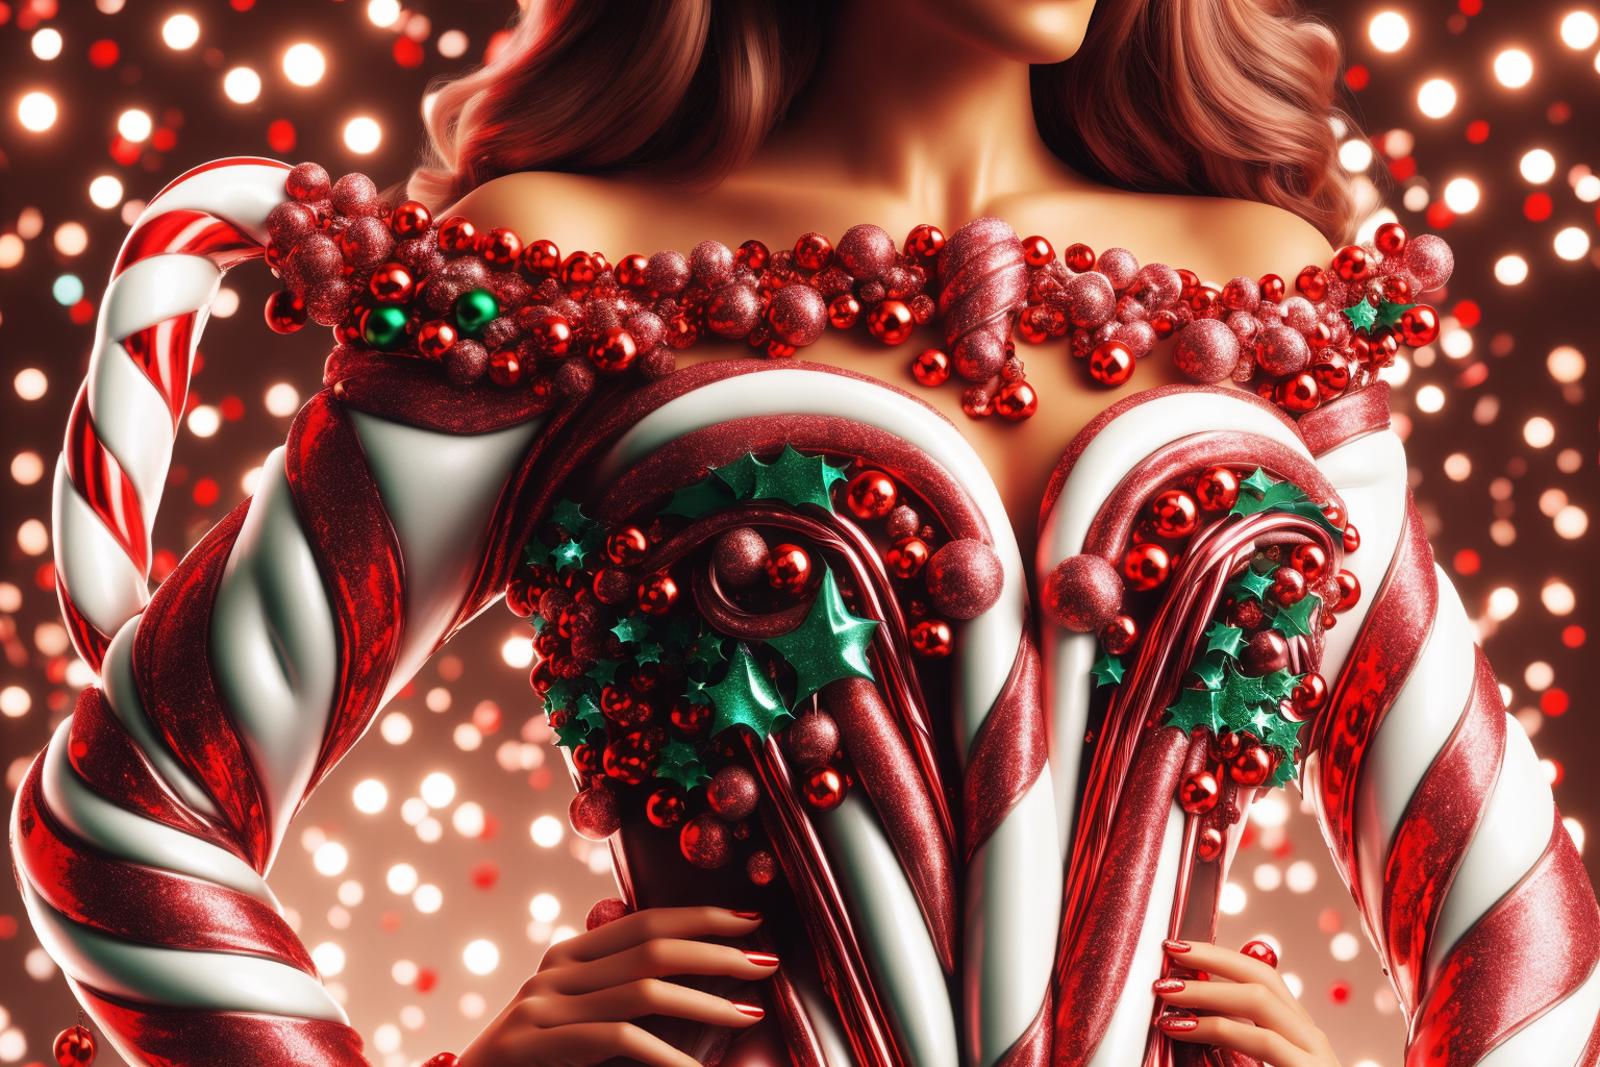 Candy Cane Style - Lora image by ElizaPottinger